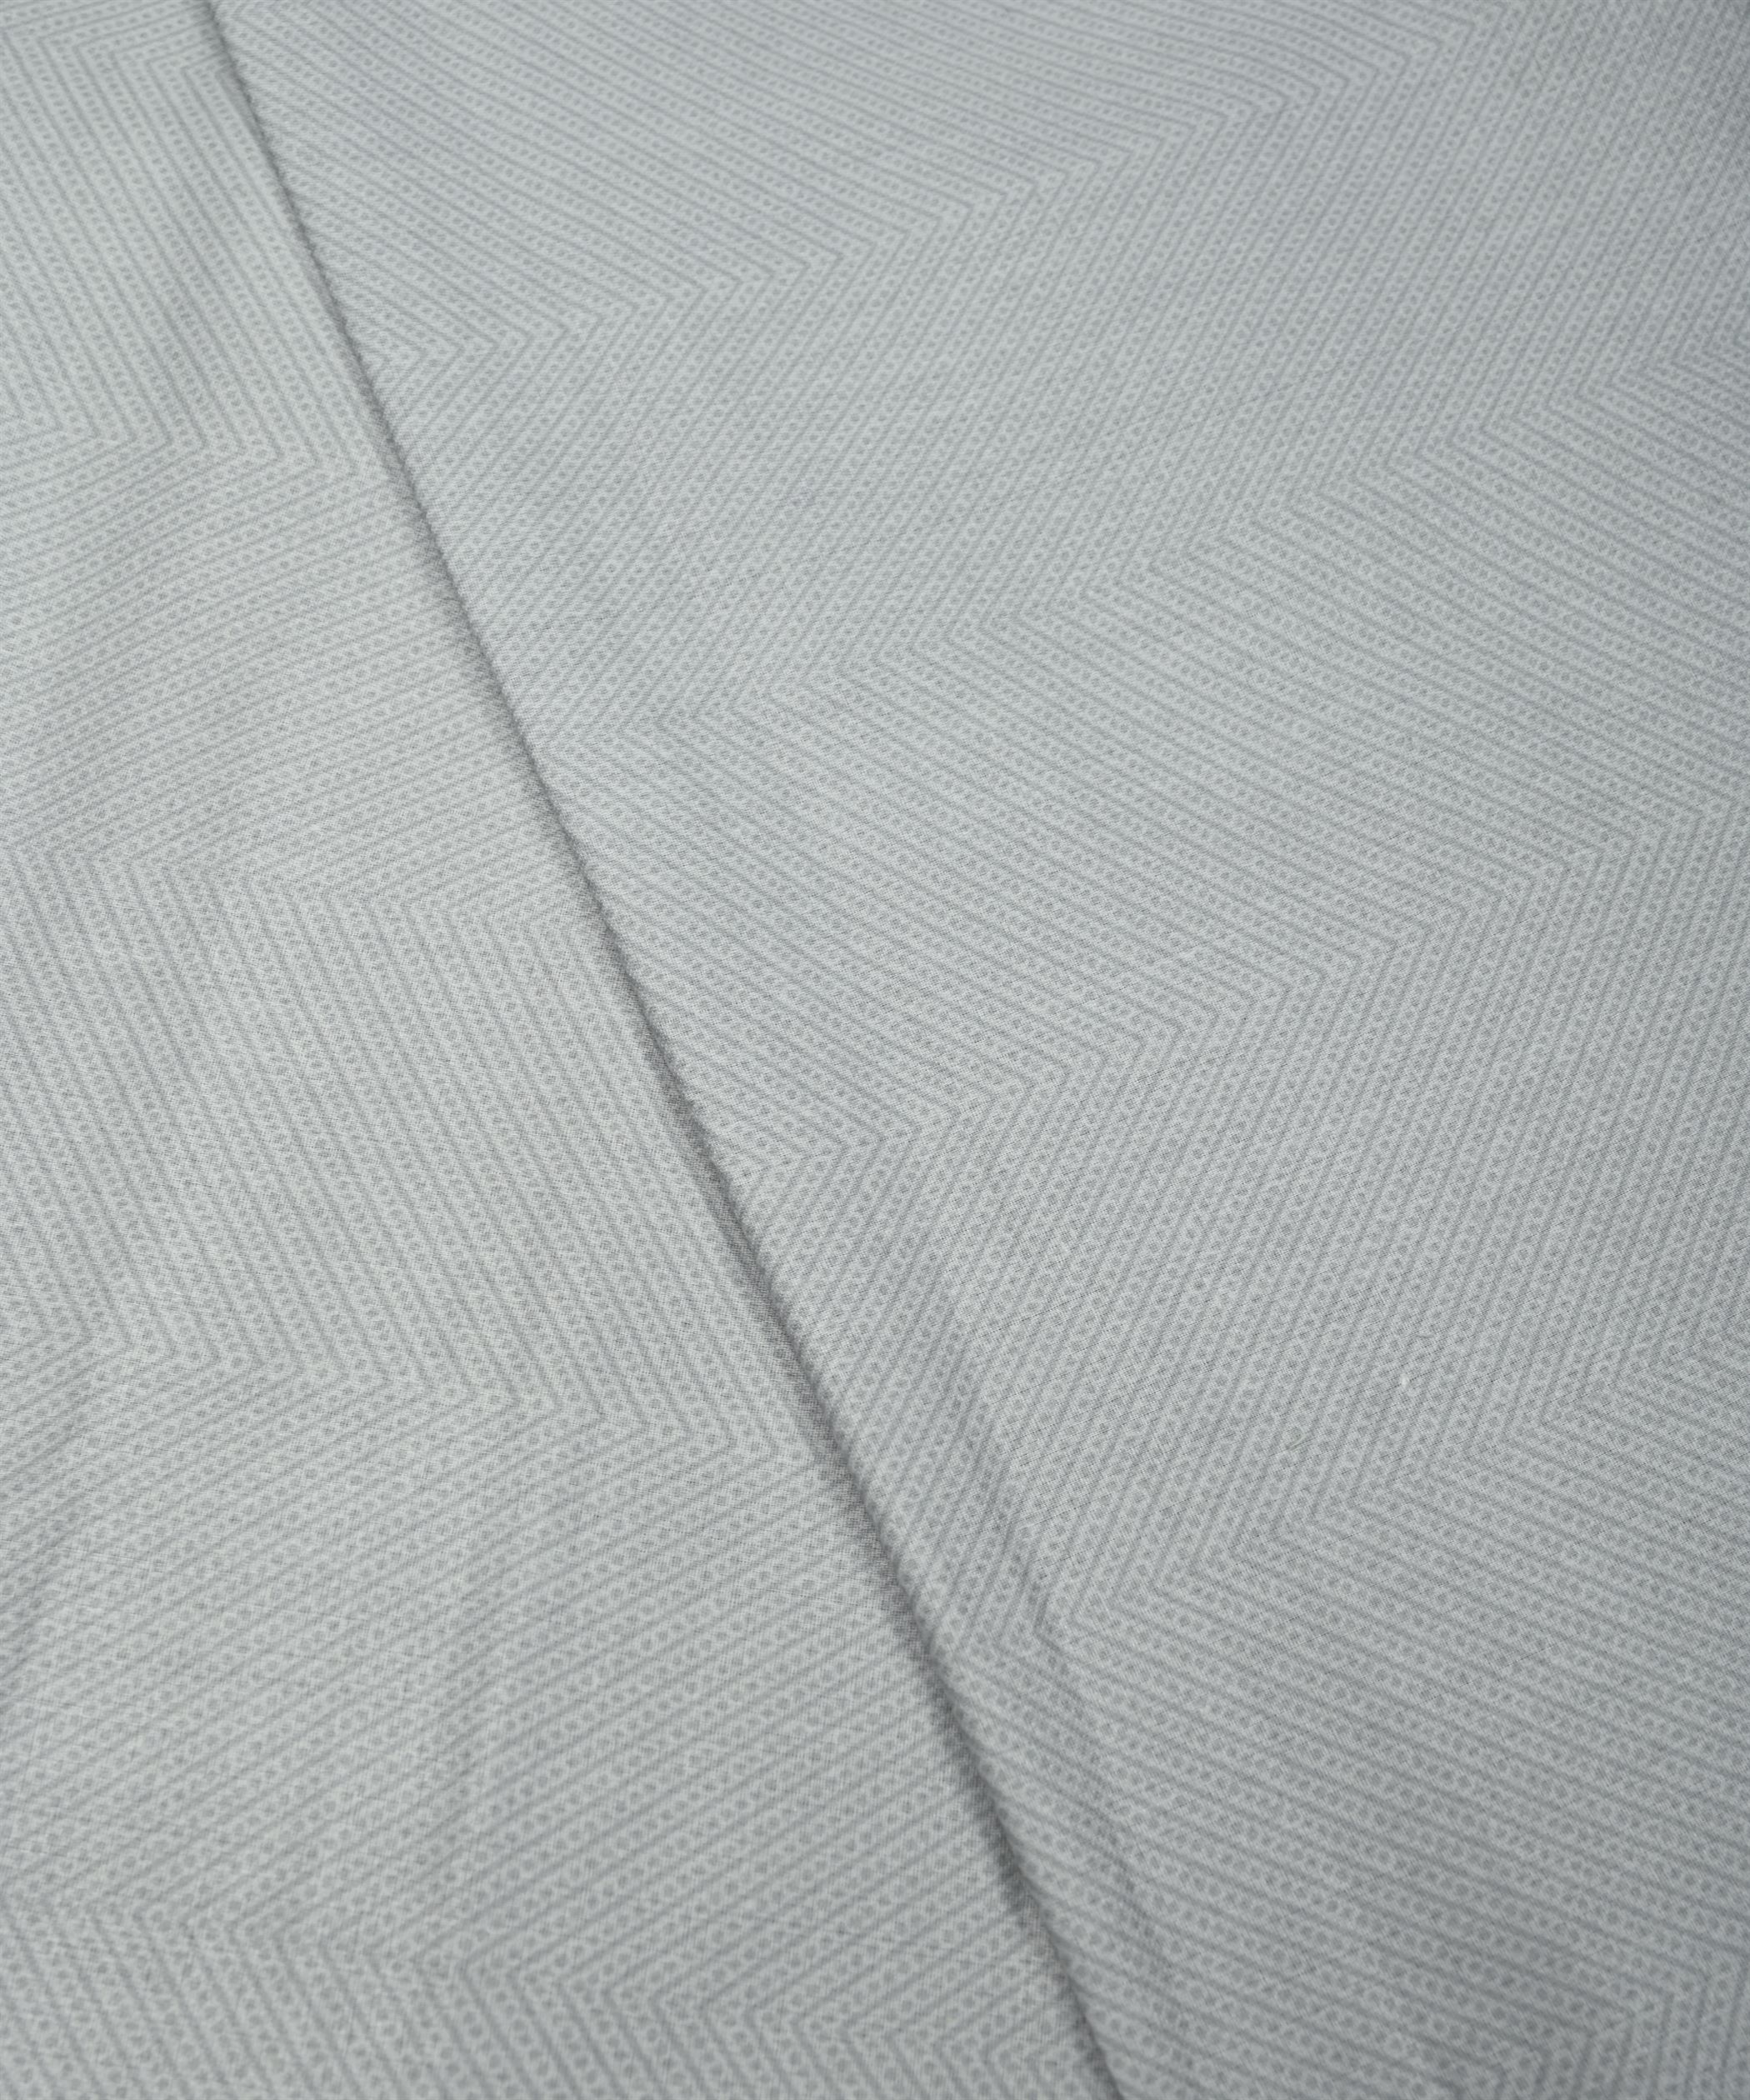 Grey Printed Cotton Satin fabric-3